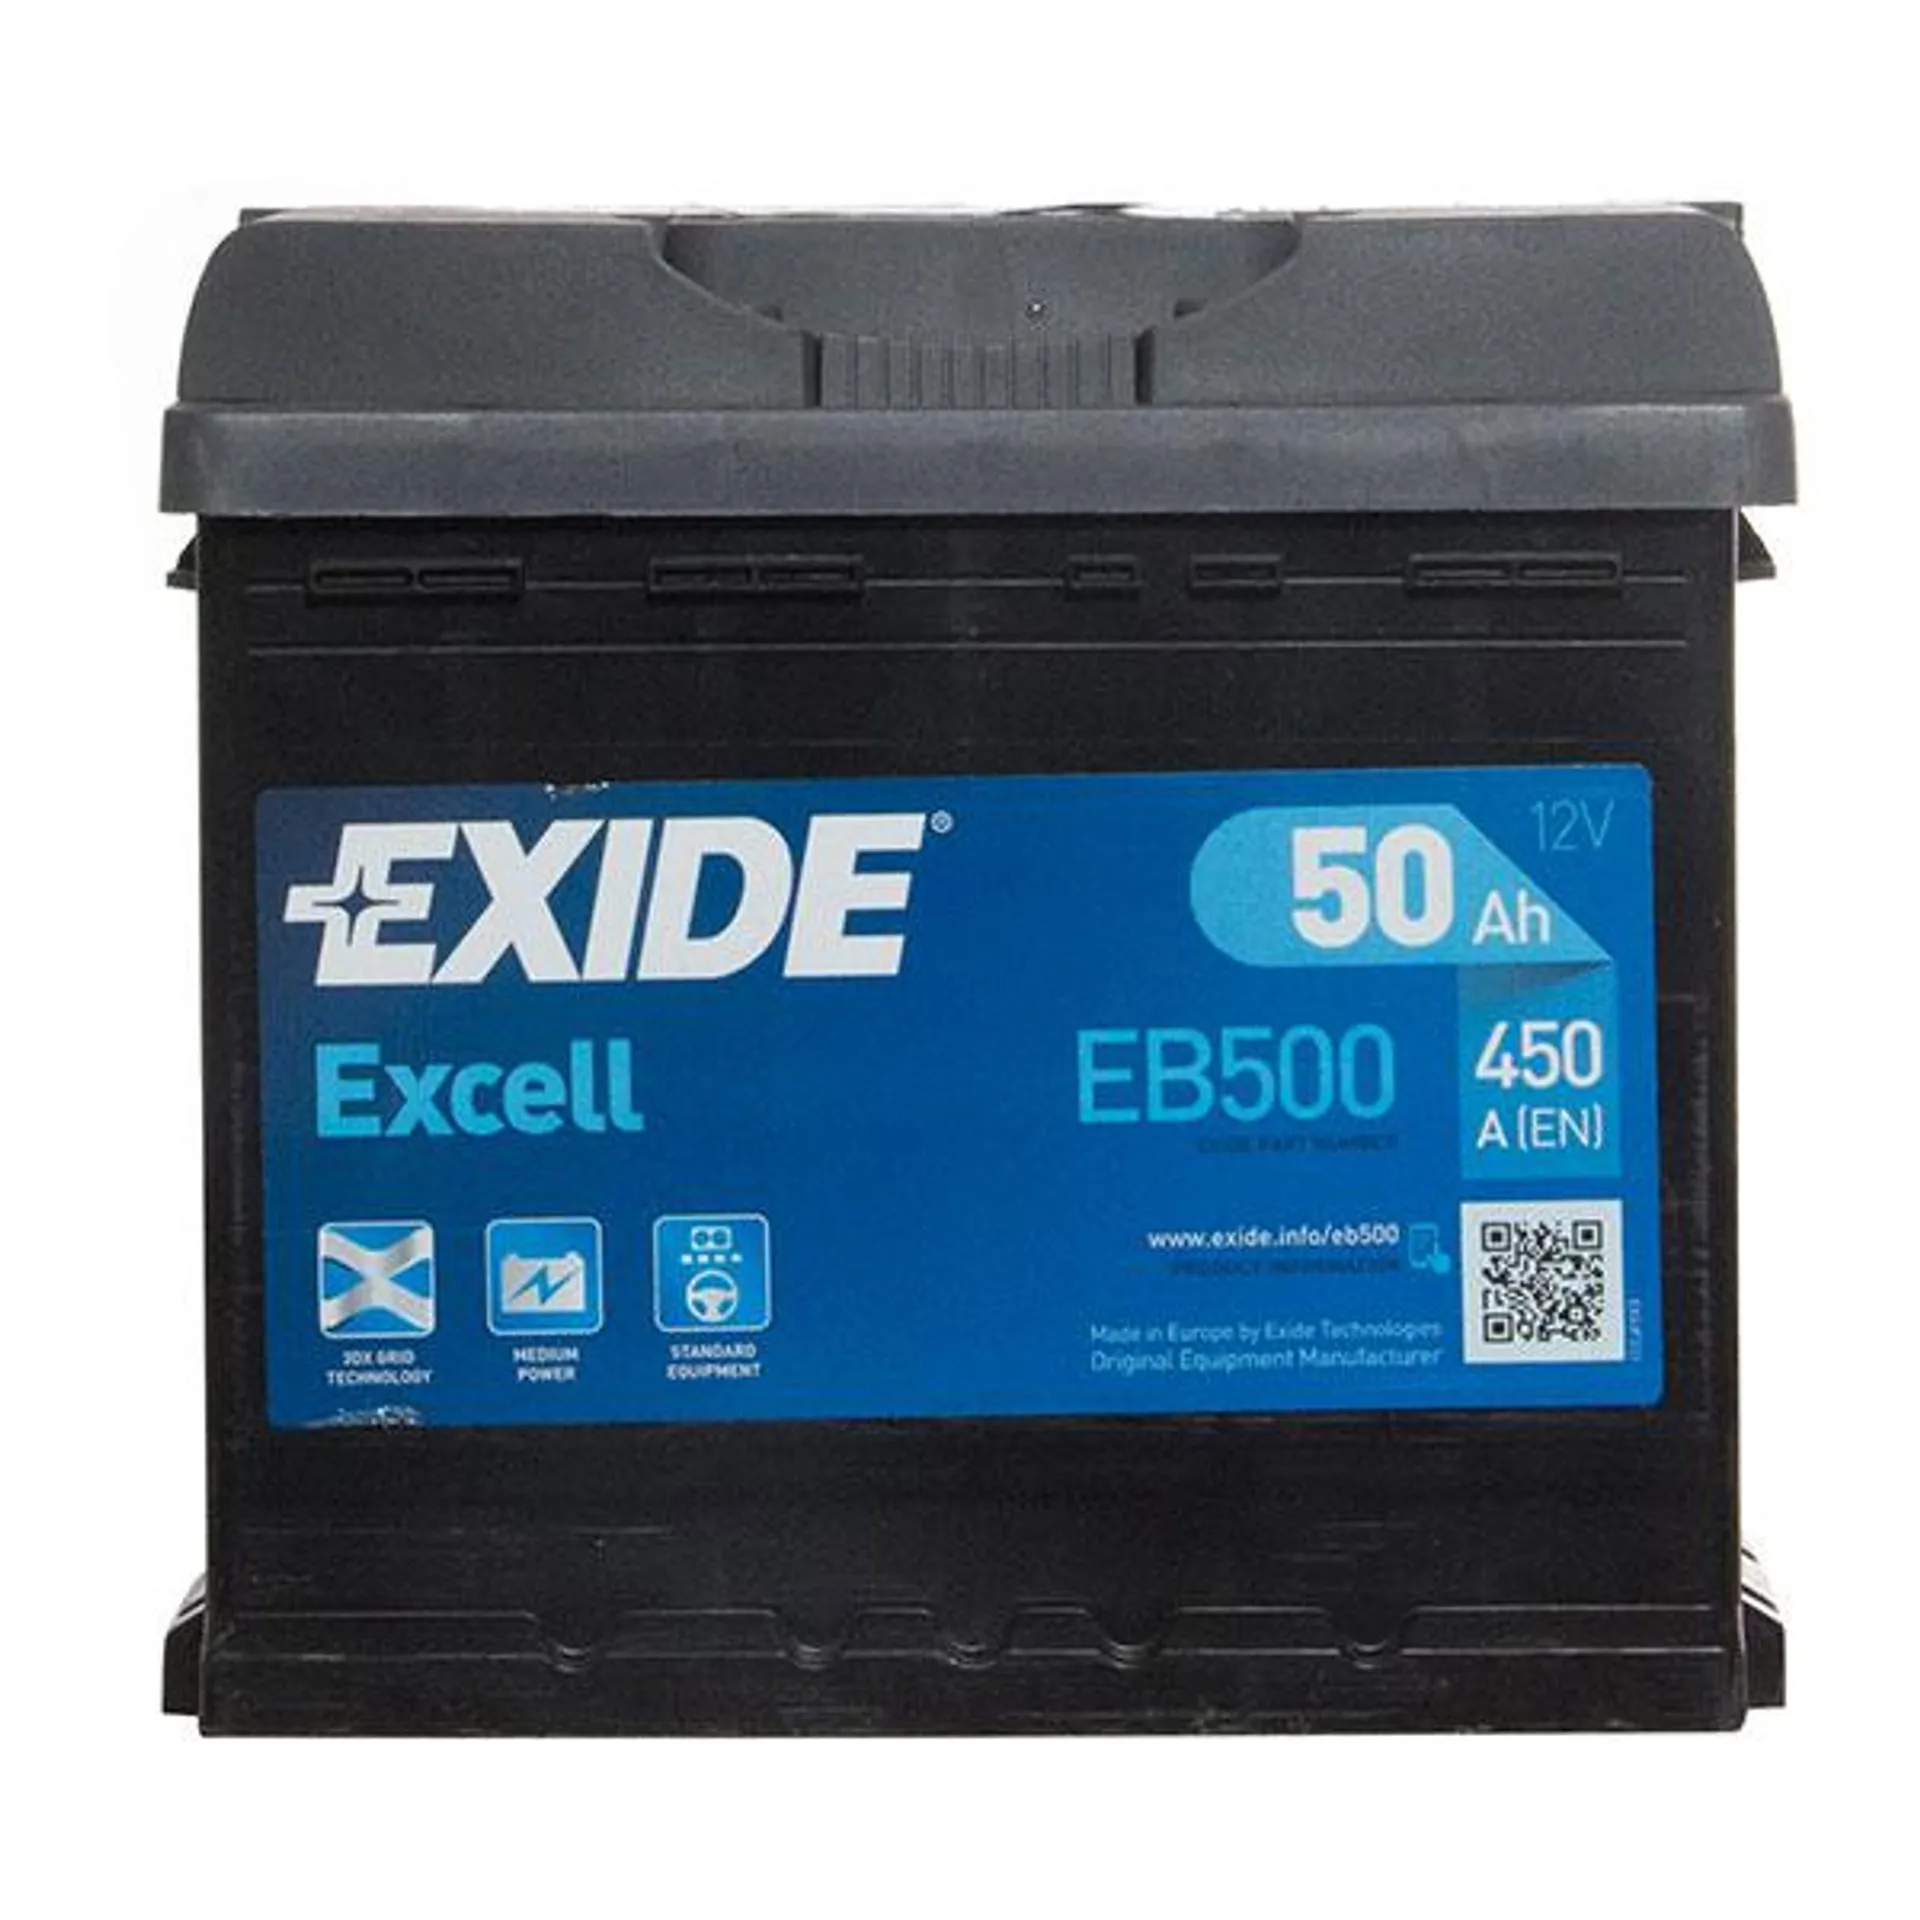 Exide Excel 012 Car Battery - 3 Year Guarantee